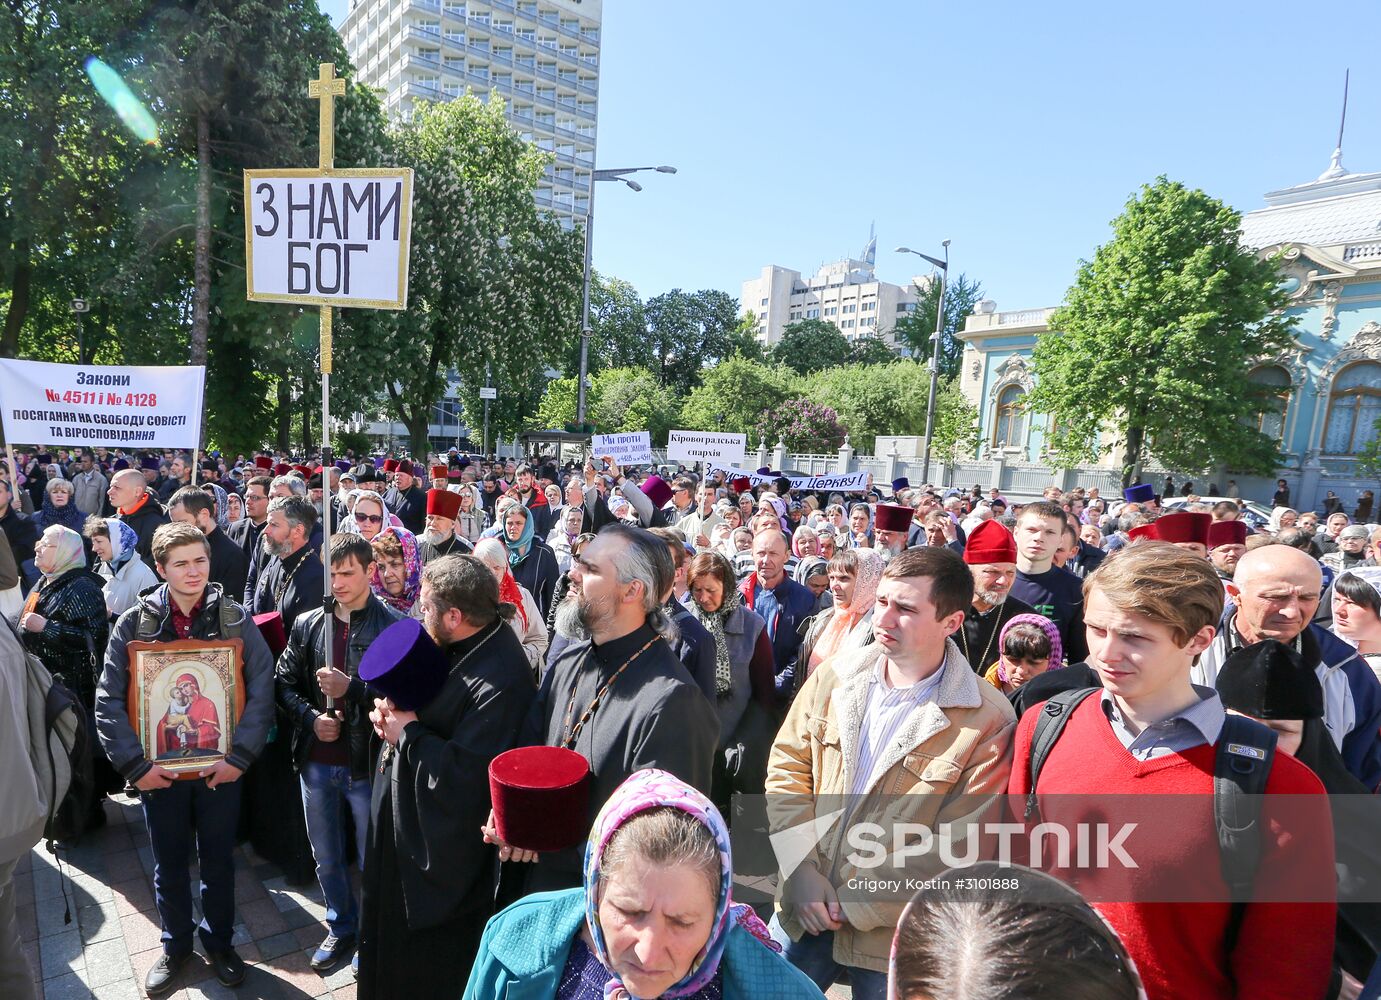 Ukrainian Orthodox Church parishioners protest in Kiev